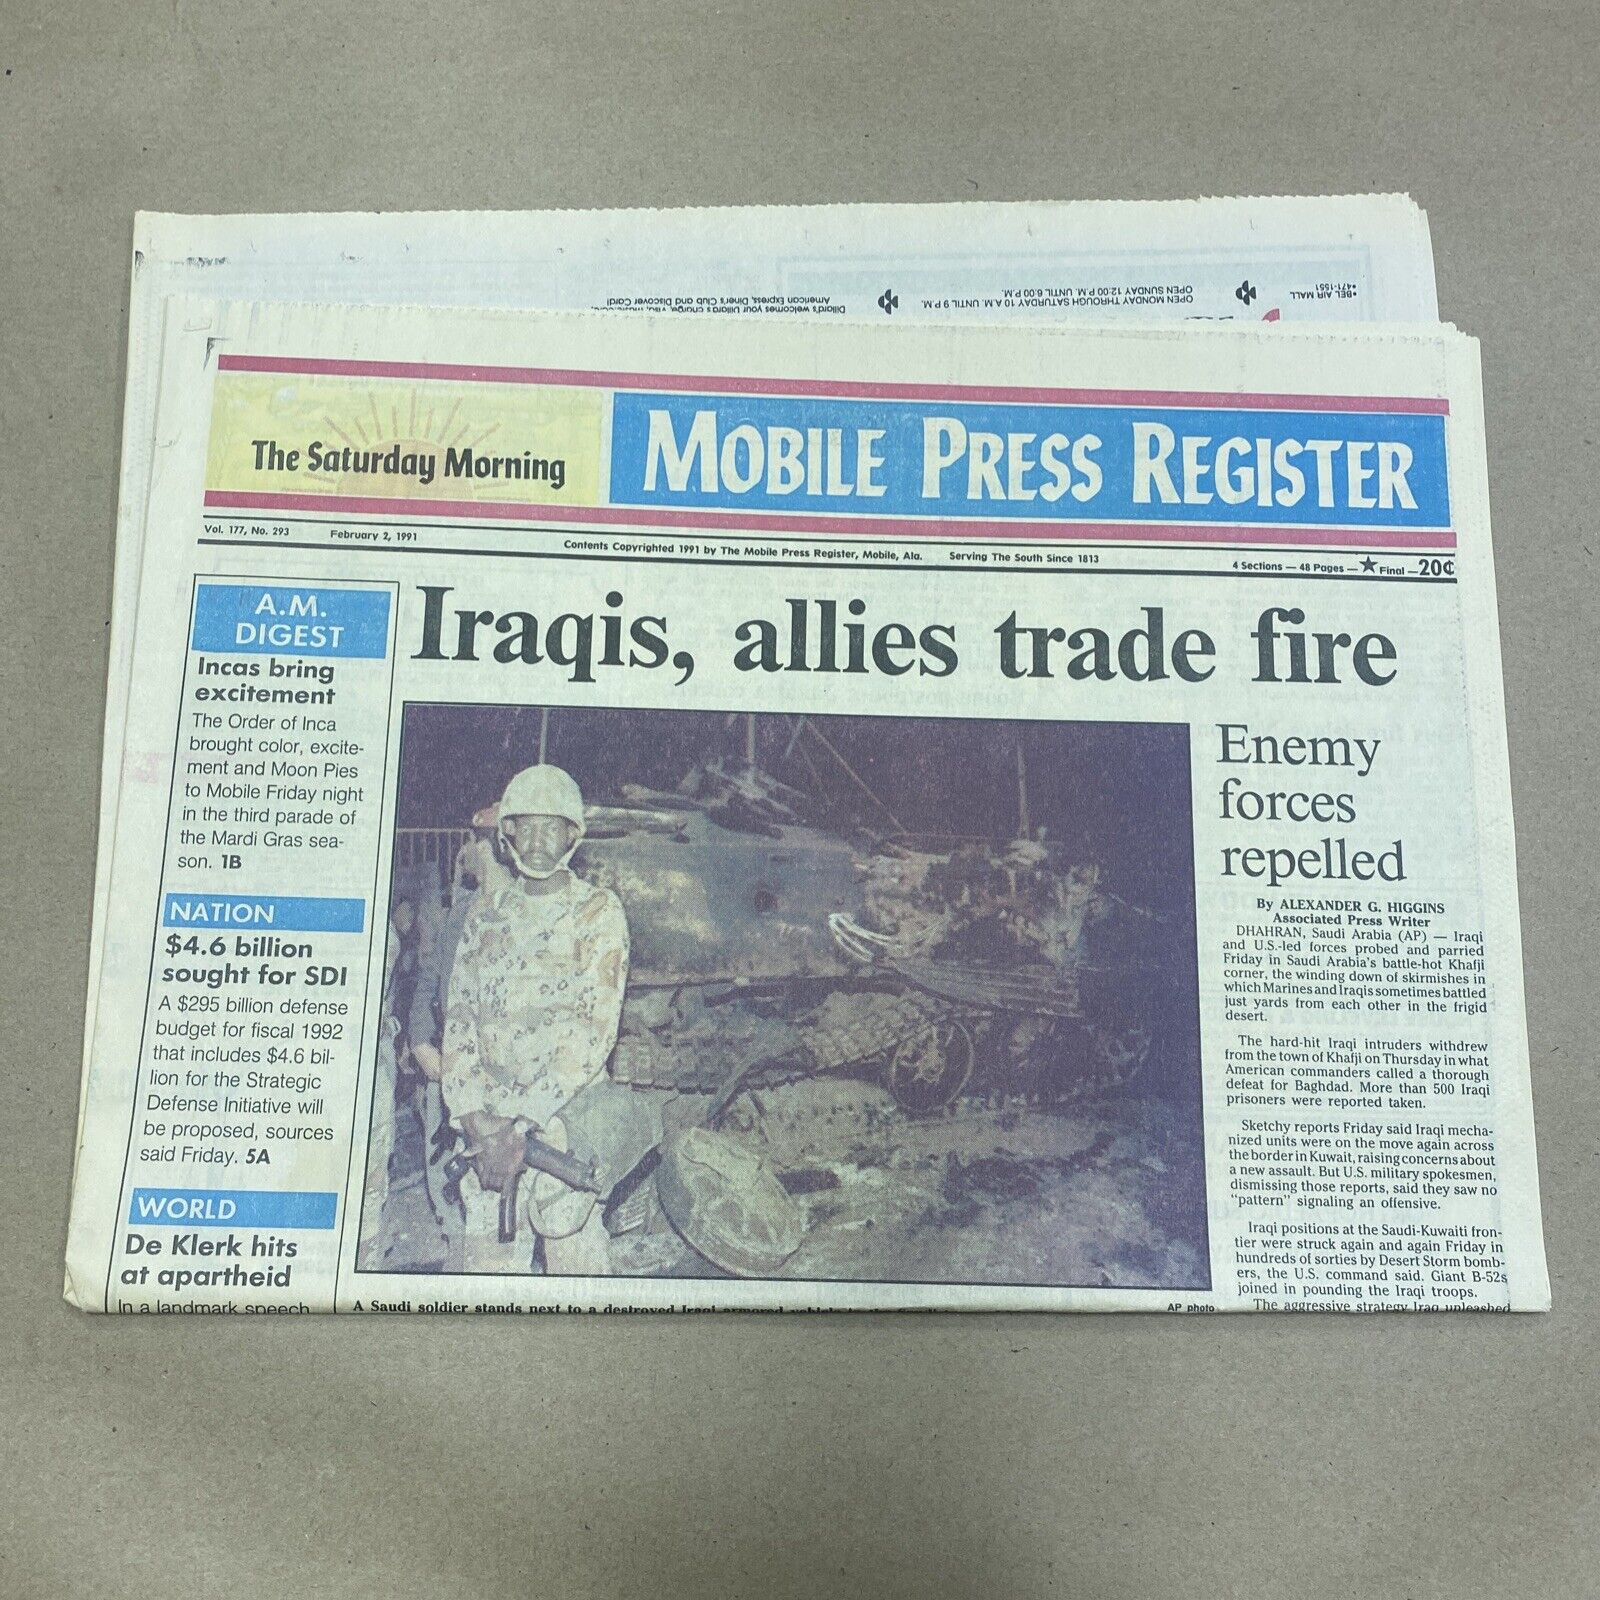 Mobile Press Register, January 2, 1991 ‘Iraqis, allies trade fire’ Newspaper